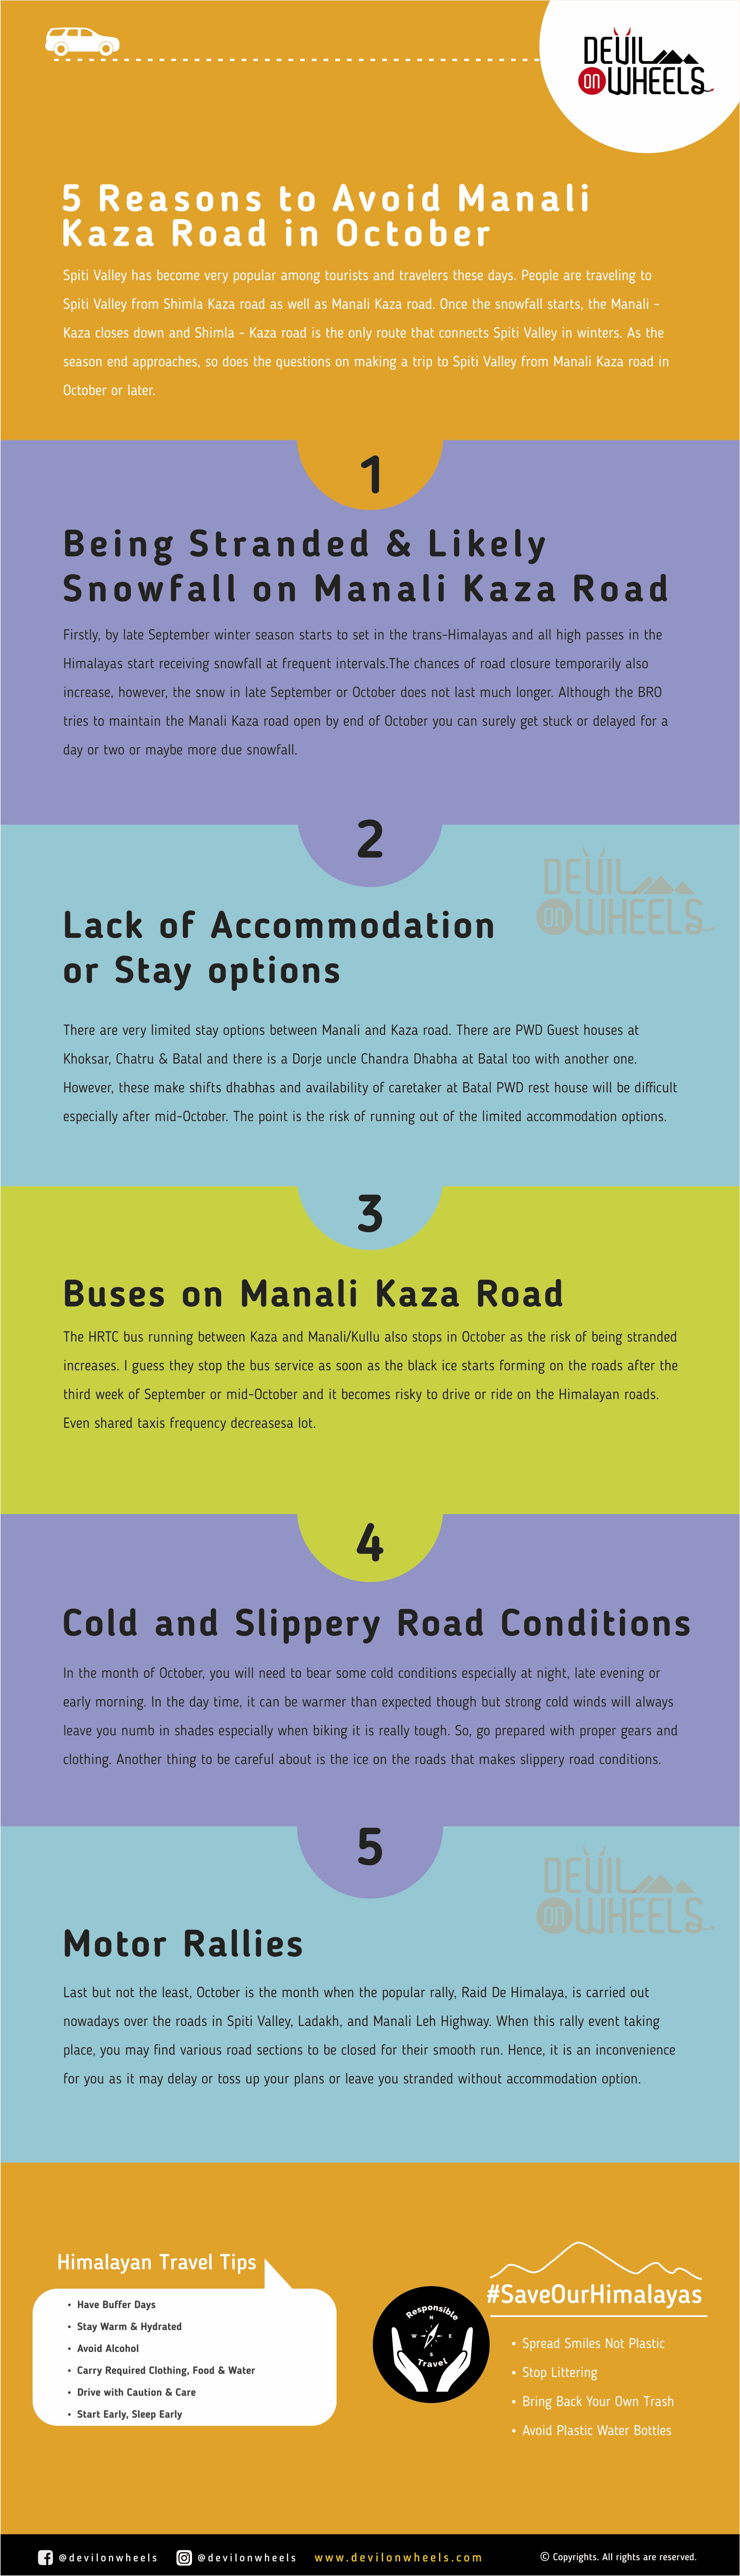 Top reasons to avoid Manali Kaza road in October